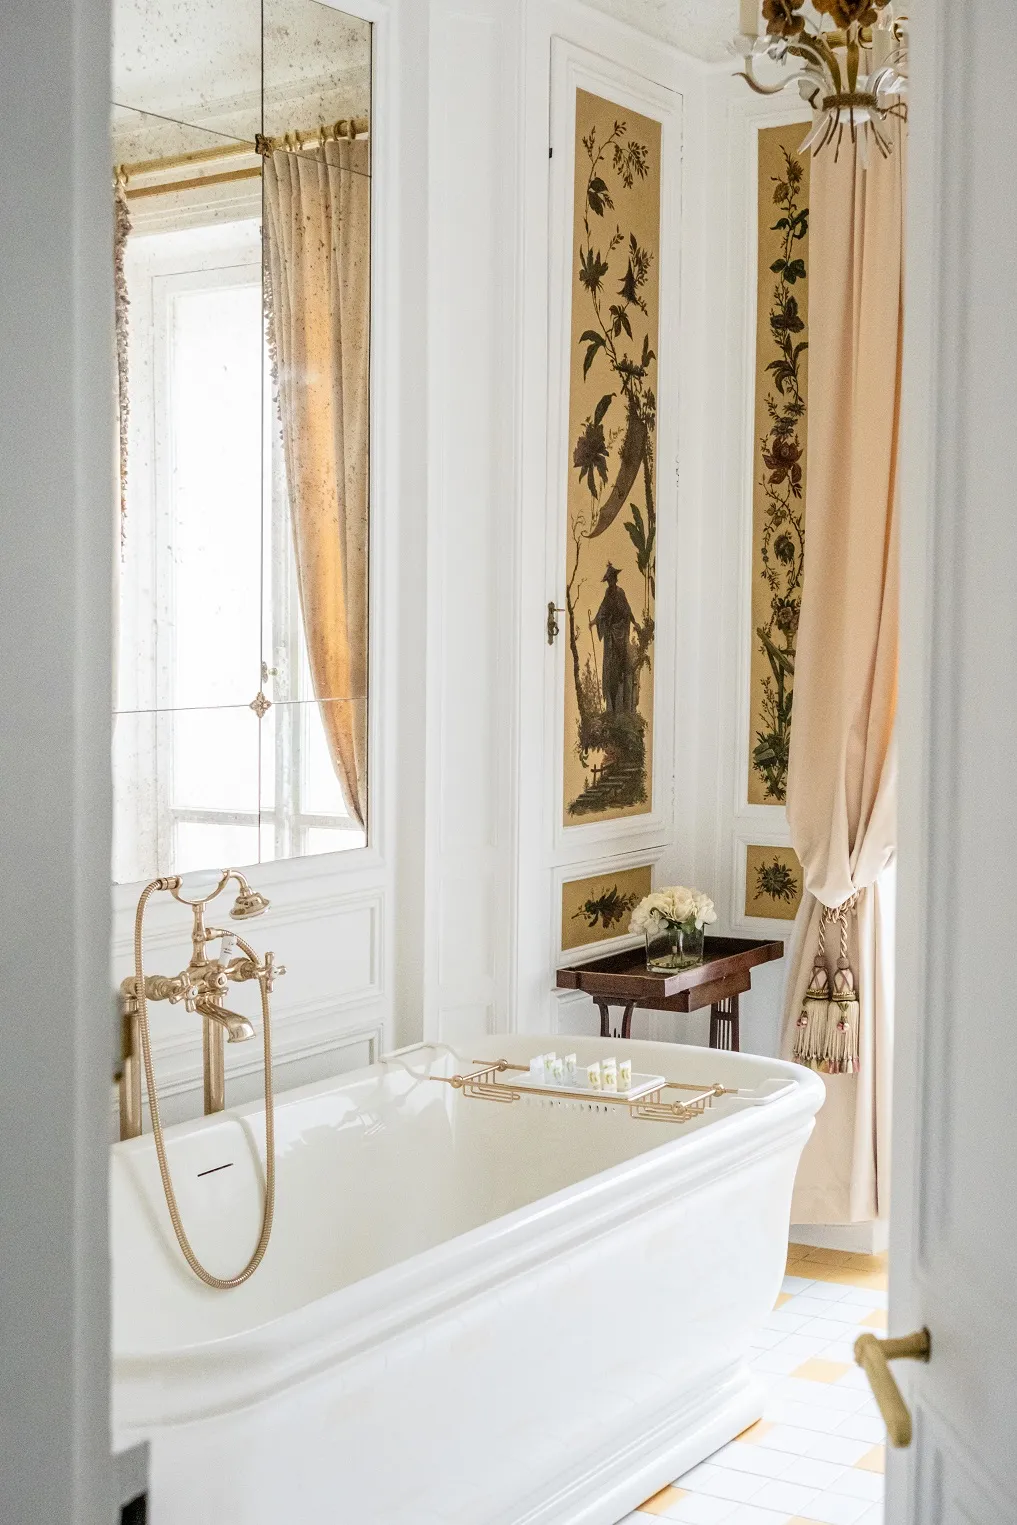 Salle de bain hotel particulier Paris a privatiser